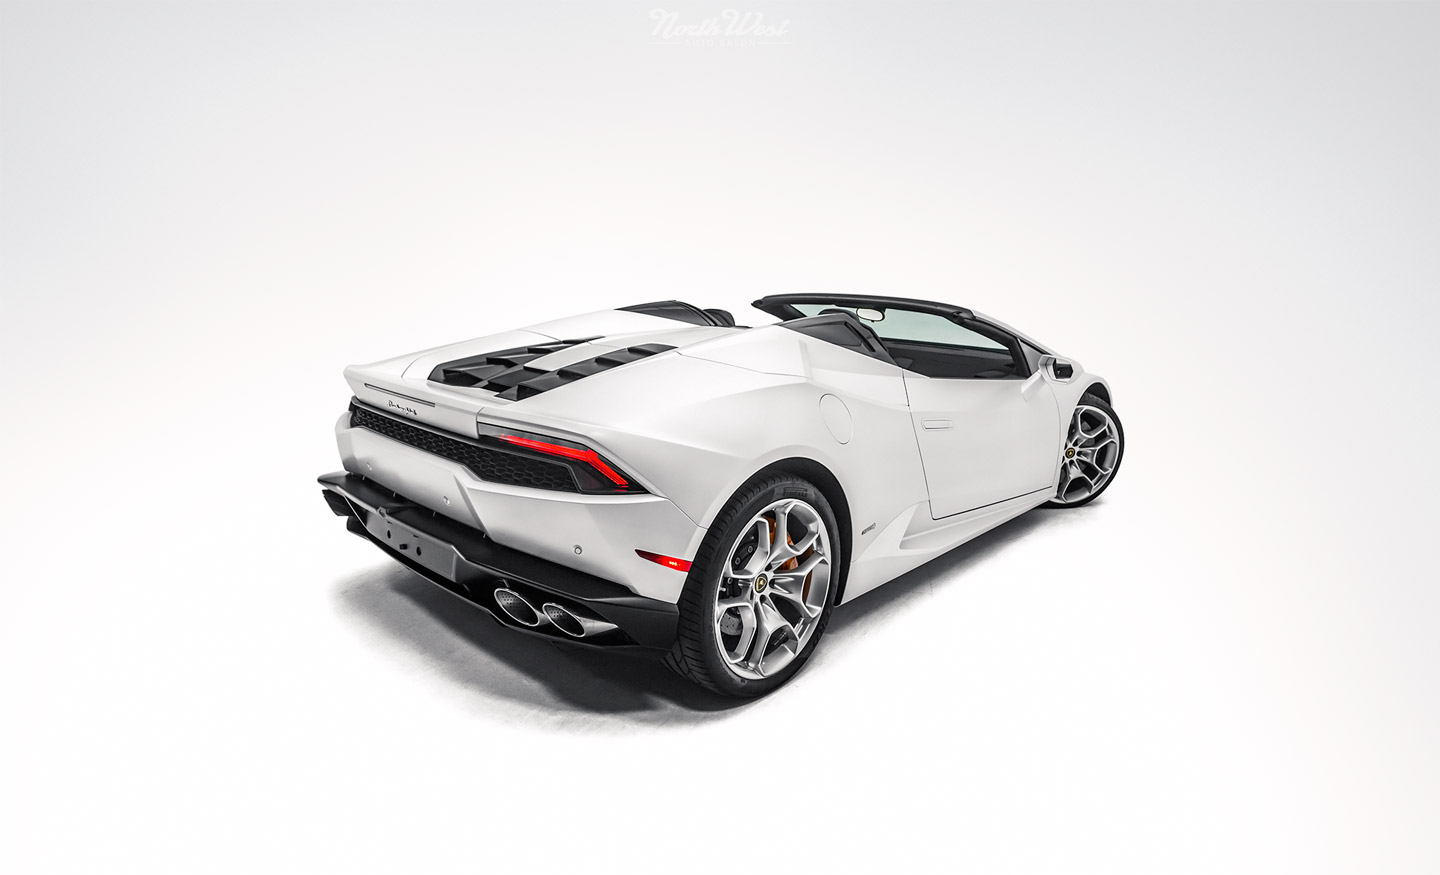 Lamborghini-Huracan-Spyder-XPEL-Stealth-wrap-Ceramic-Pro-Textile-soft-top-protection-prestige-window-tint-studio-rear-qtr